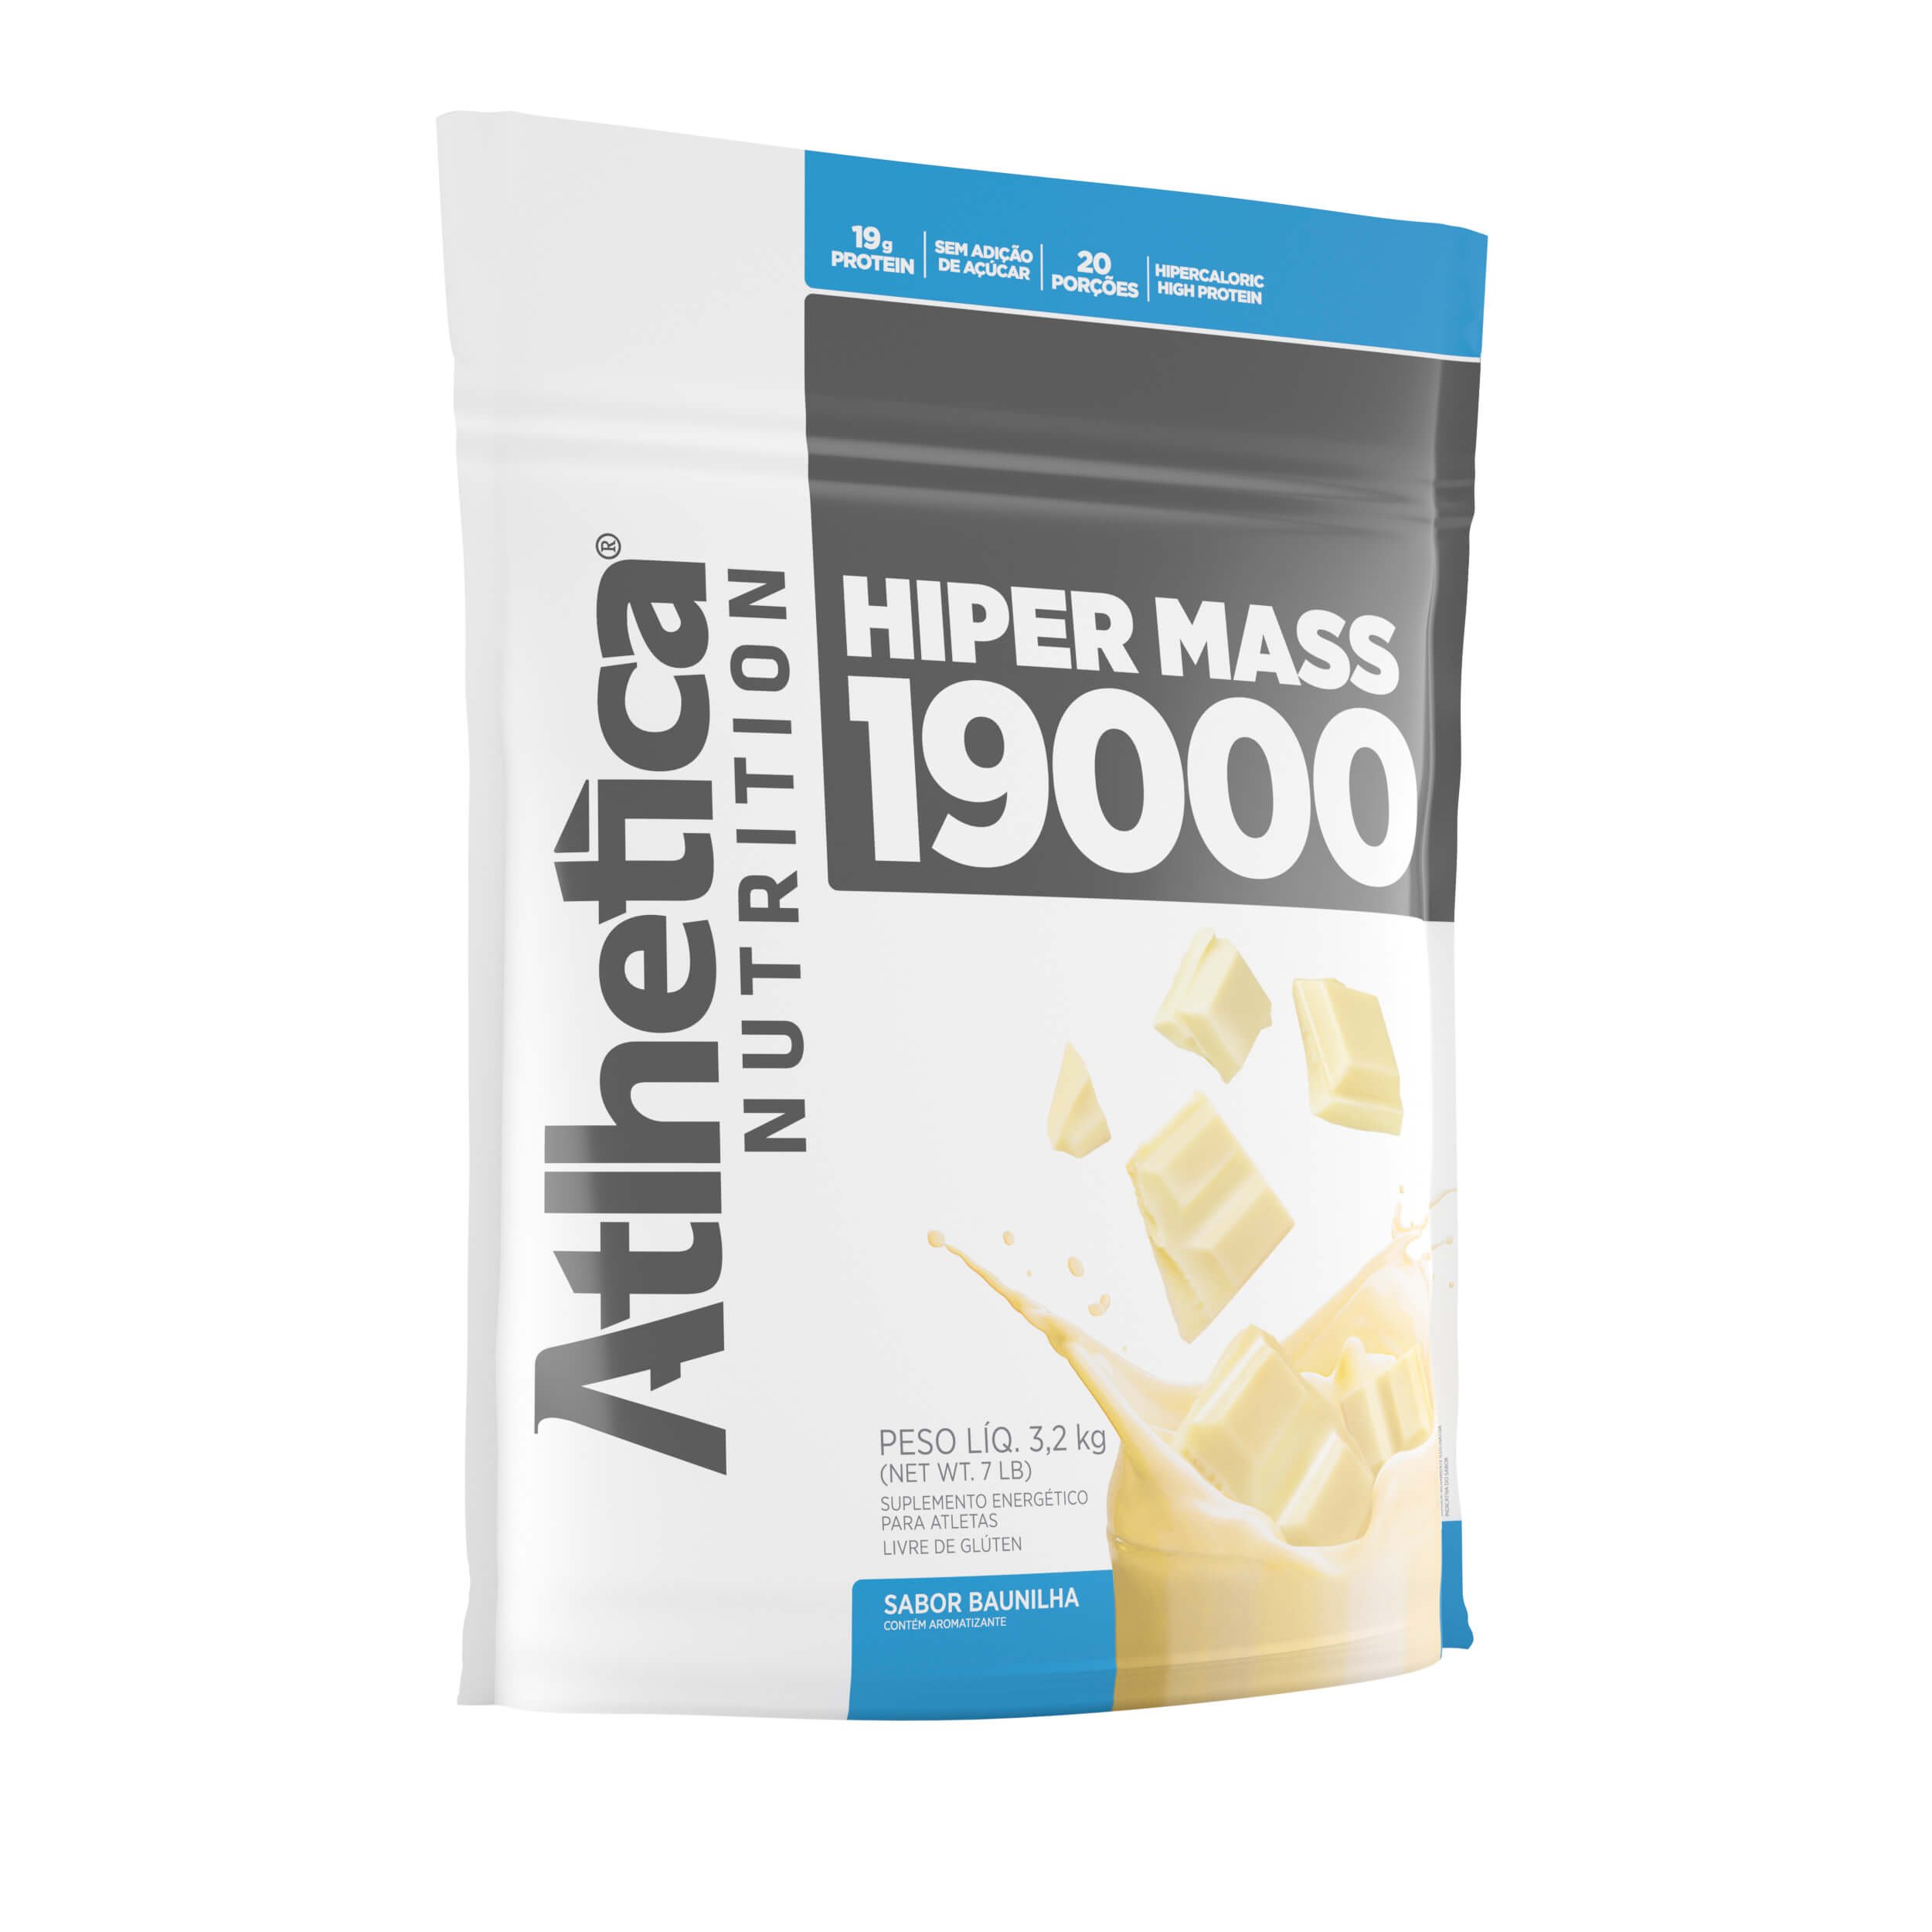 Hiper Mass 19000 Refil Baunilha, Athletica Nutrition, 3200g